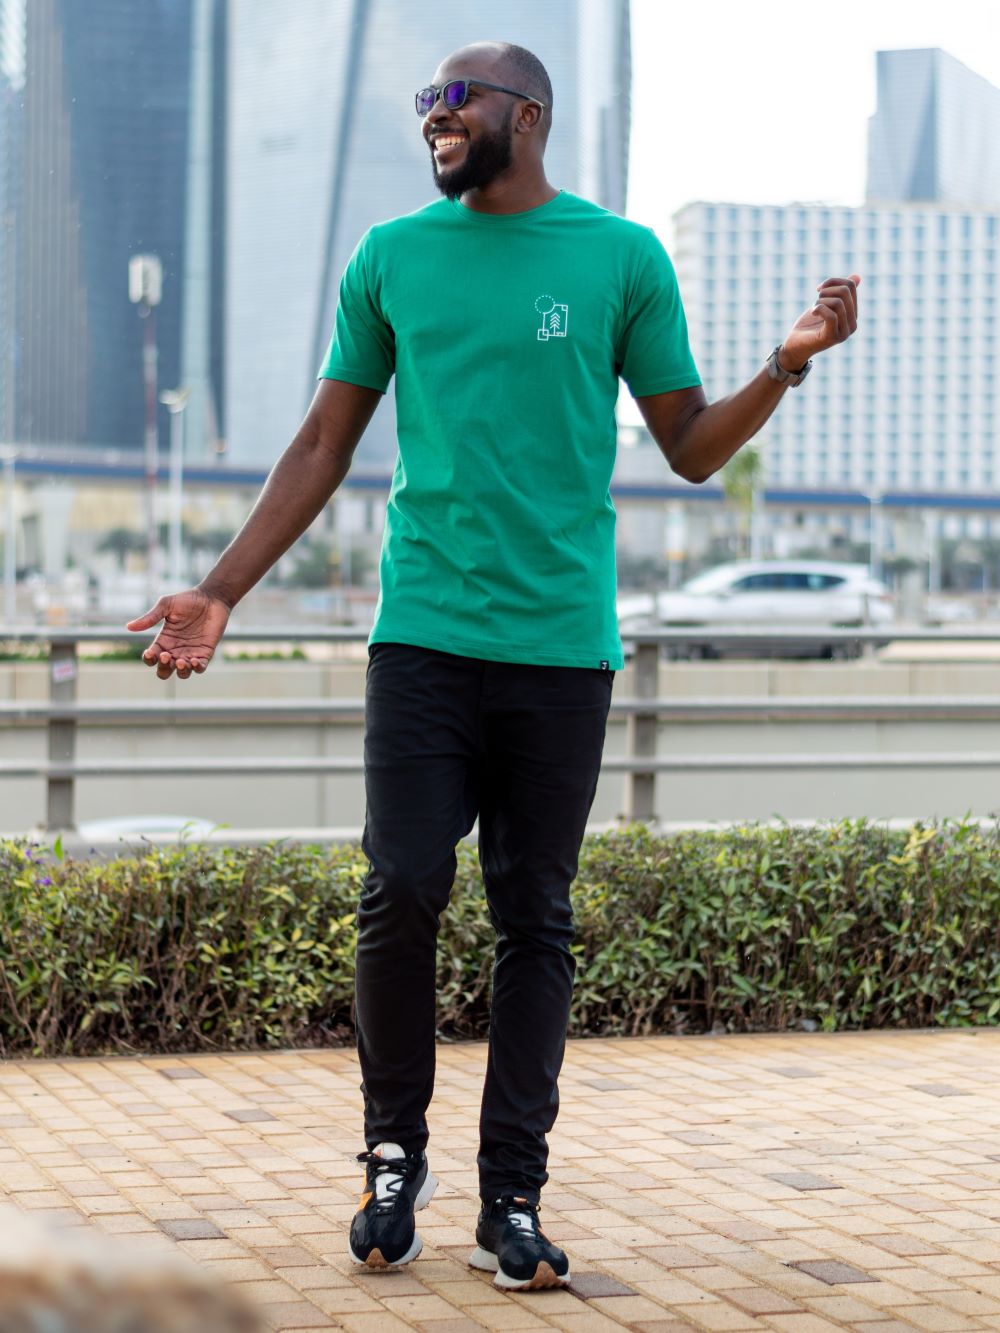 A tall skinny guy in a green tall slim t-shirt.